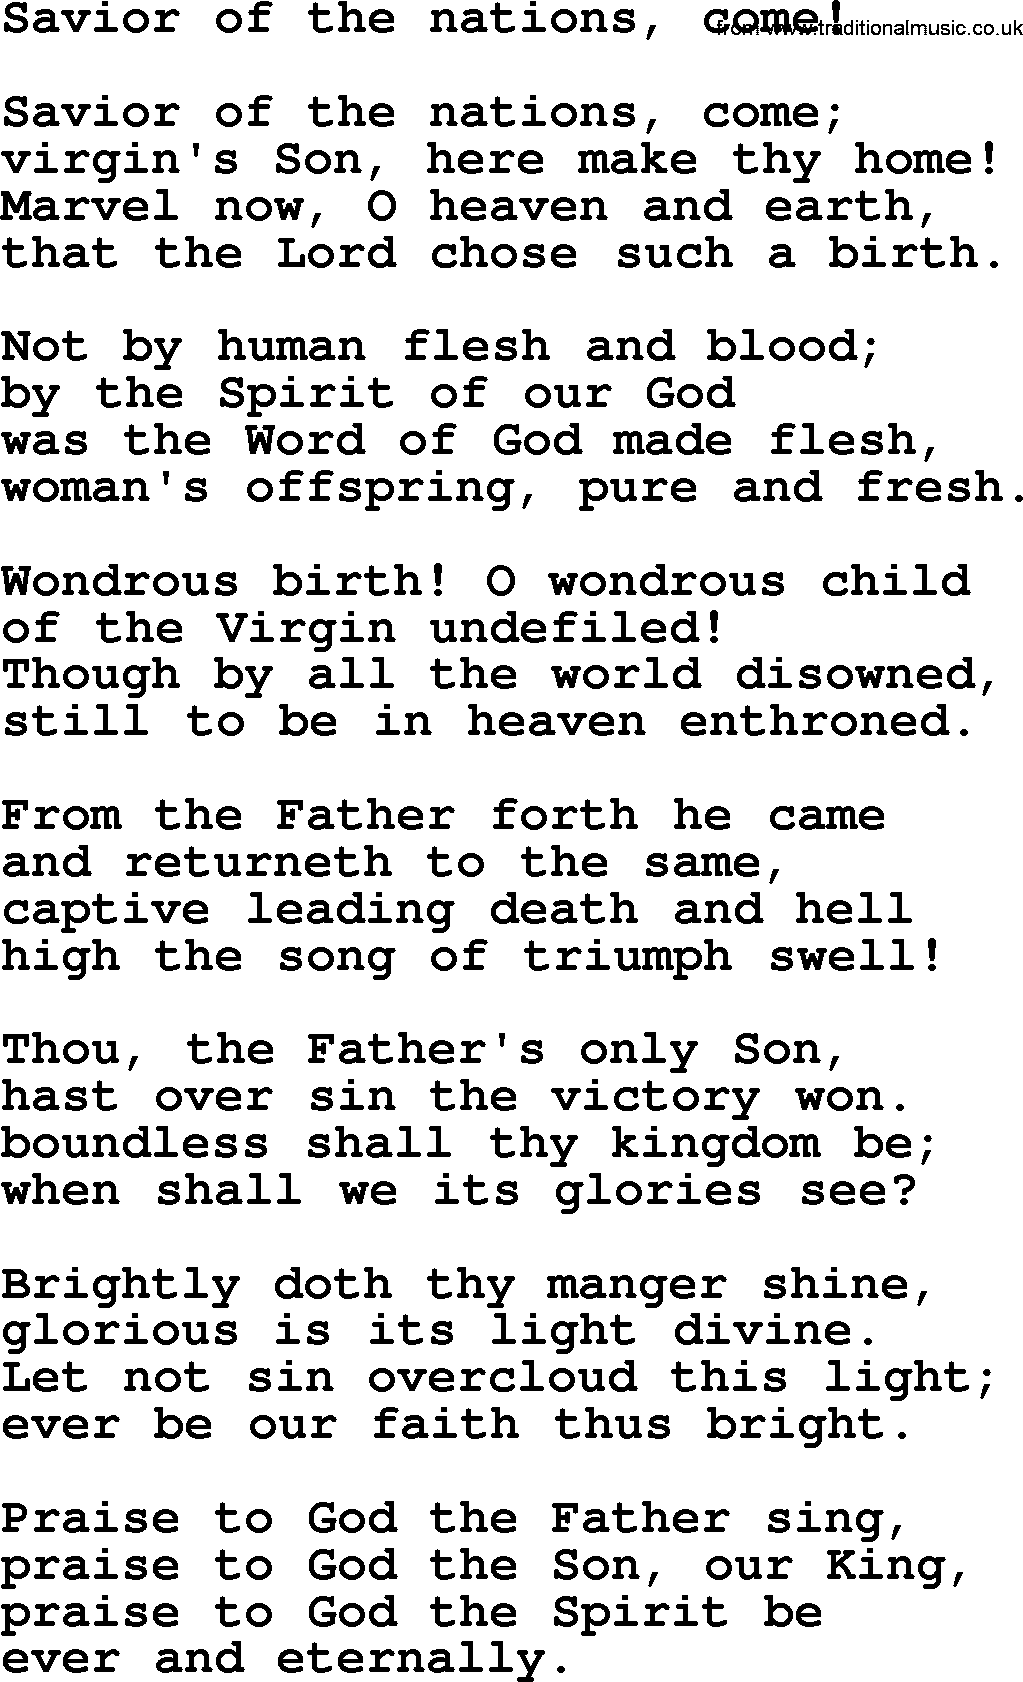 Christmas Hymns, Carols and Songs, title: Savior Of The Nations, Come!, lyrics with PDF